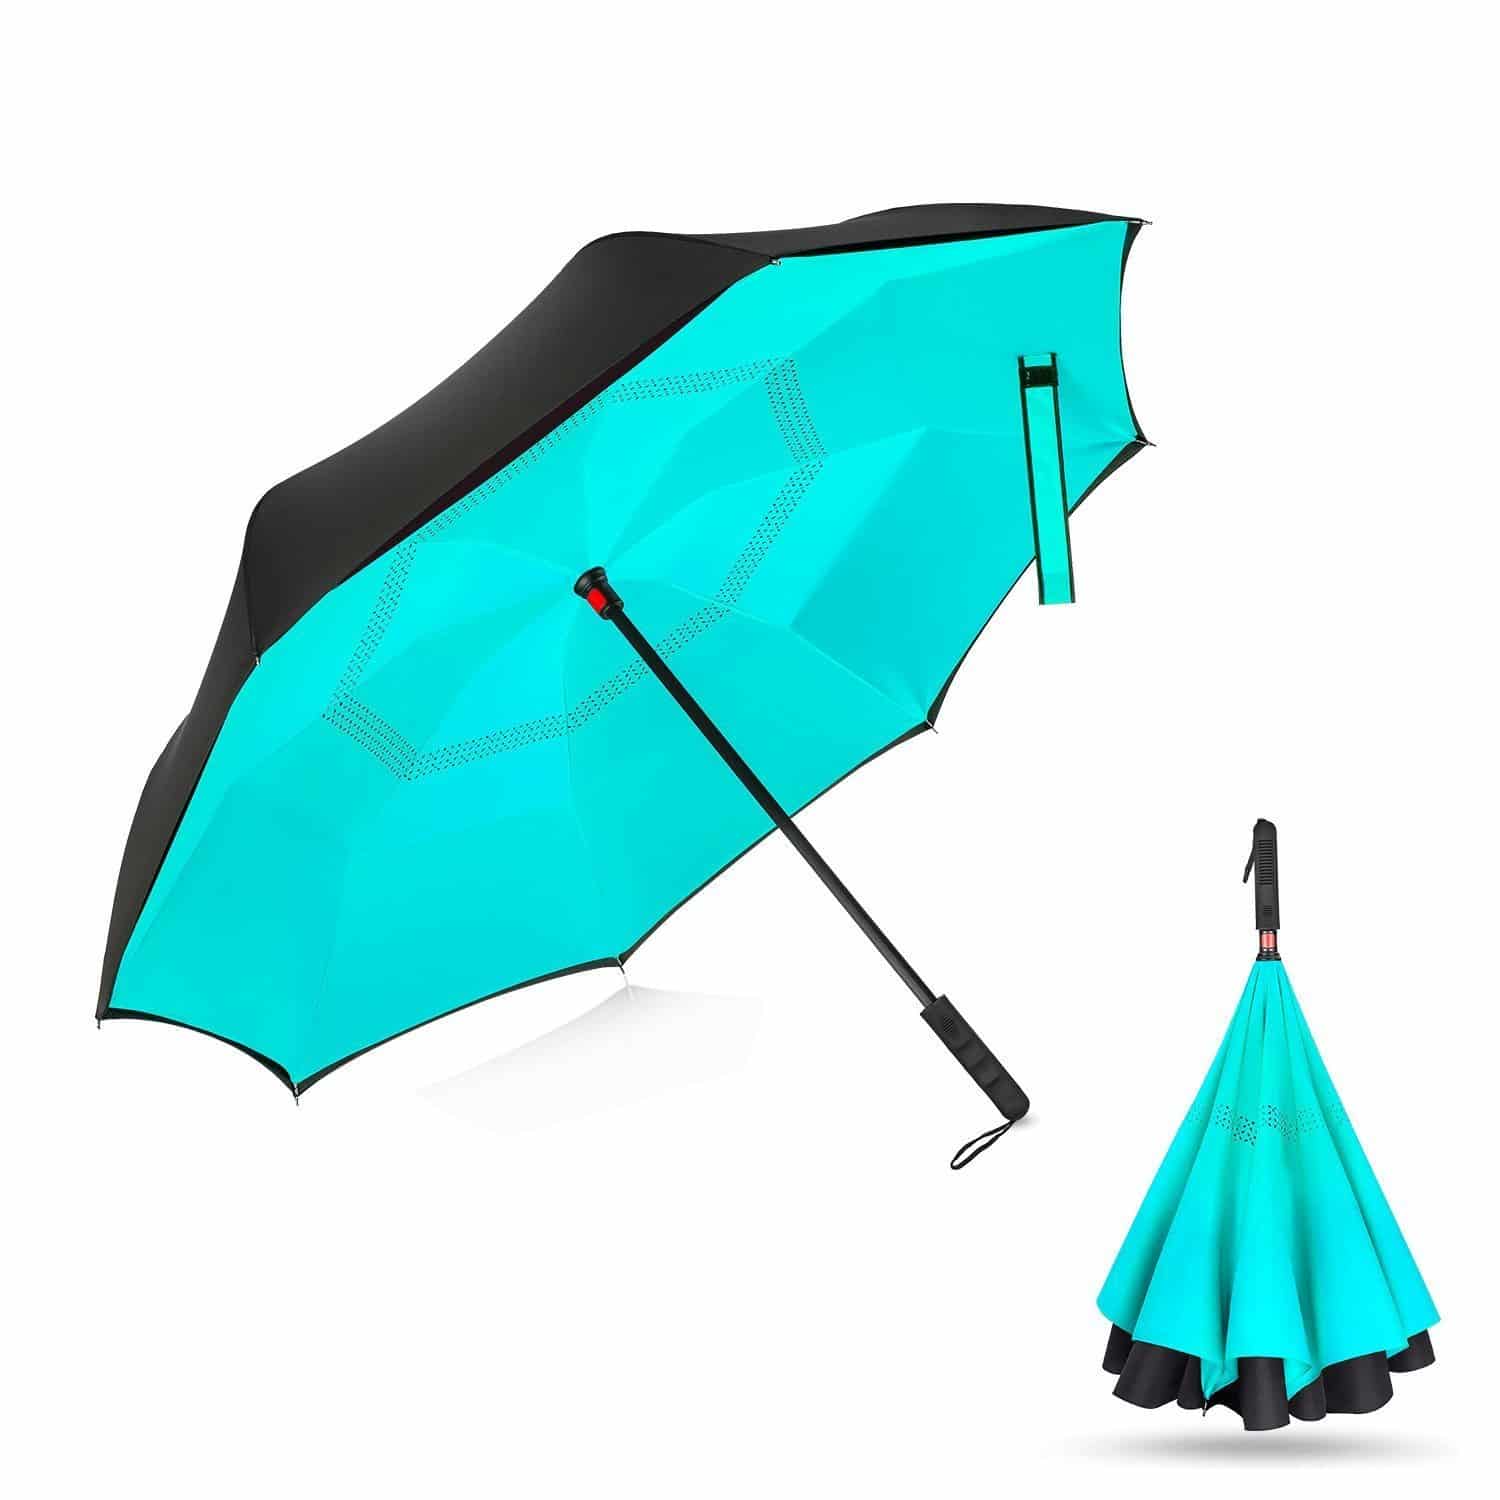 DEAL ALERT: Inverted Folding Umbrella – 66% off!